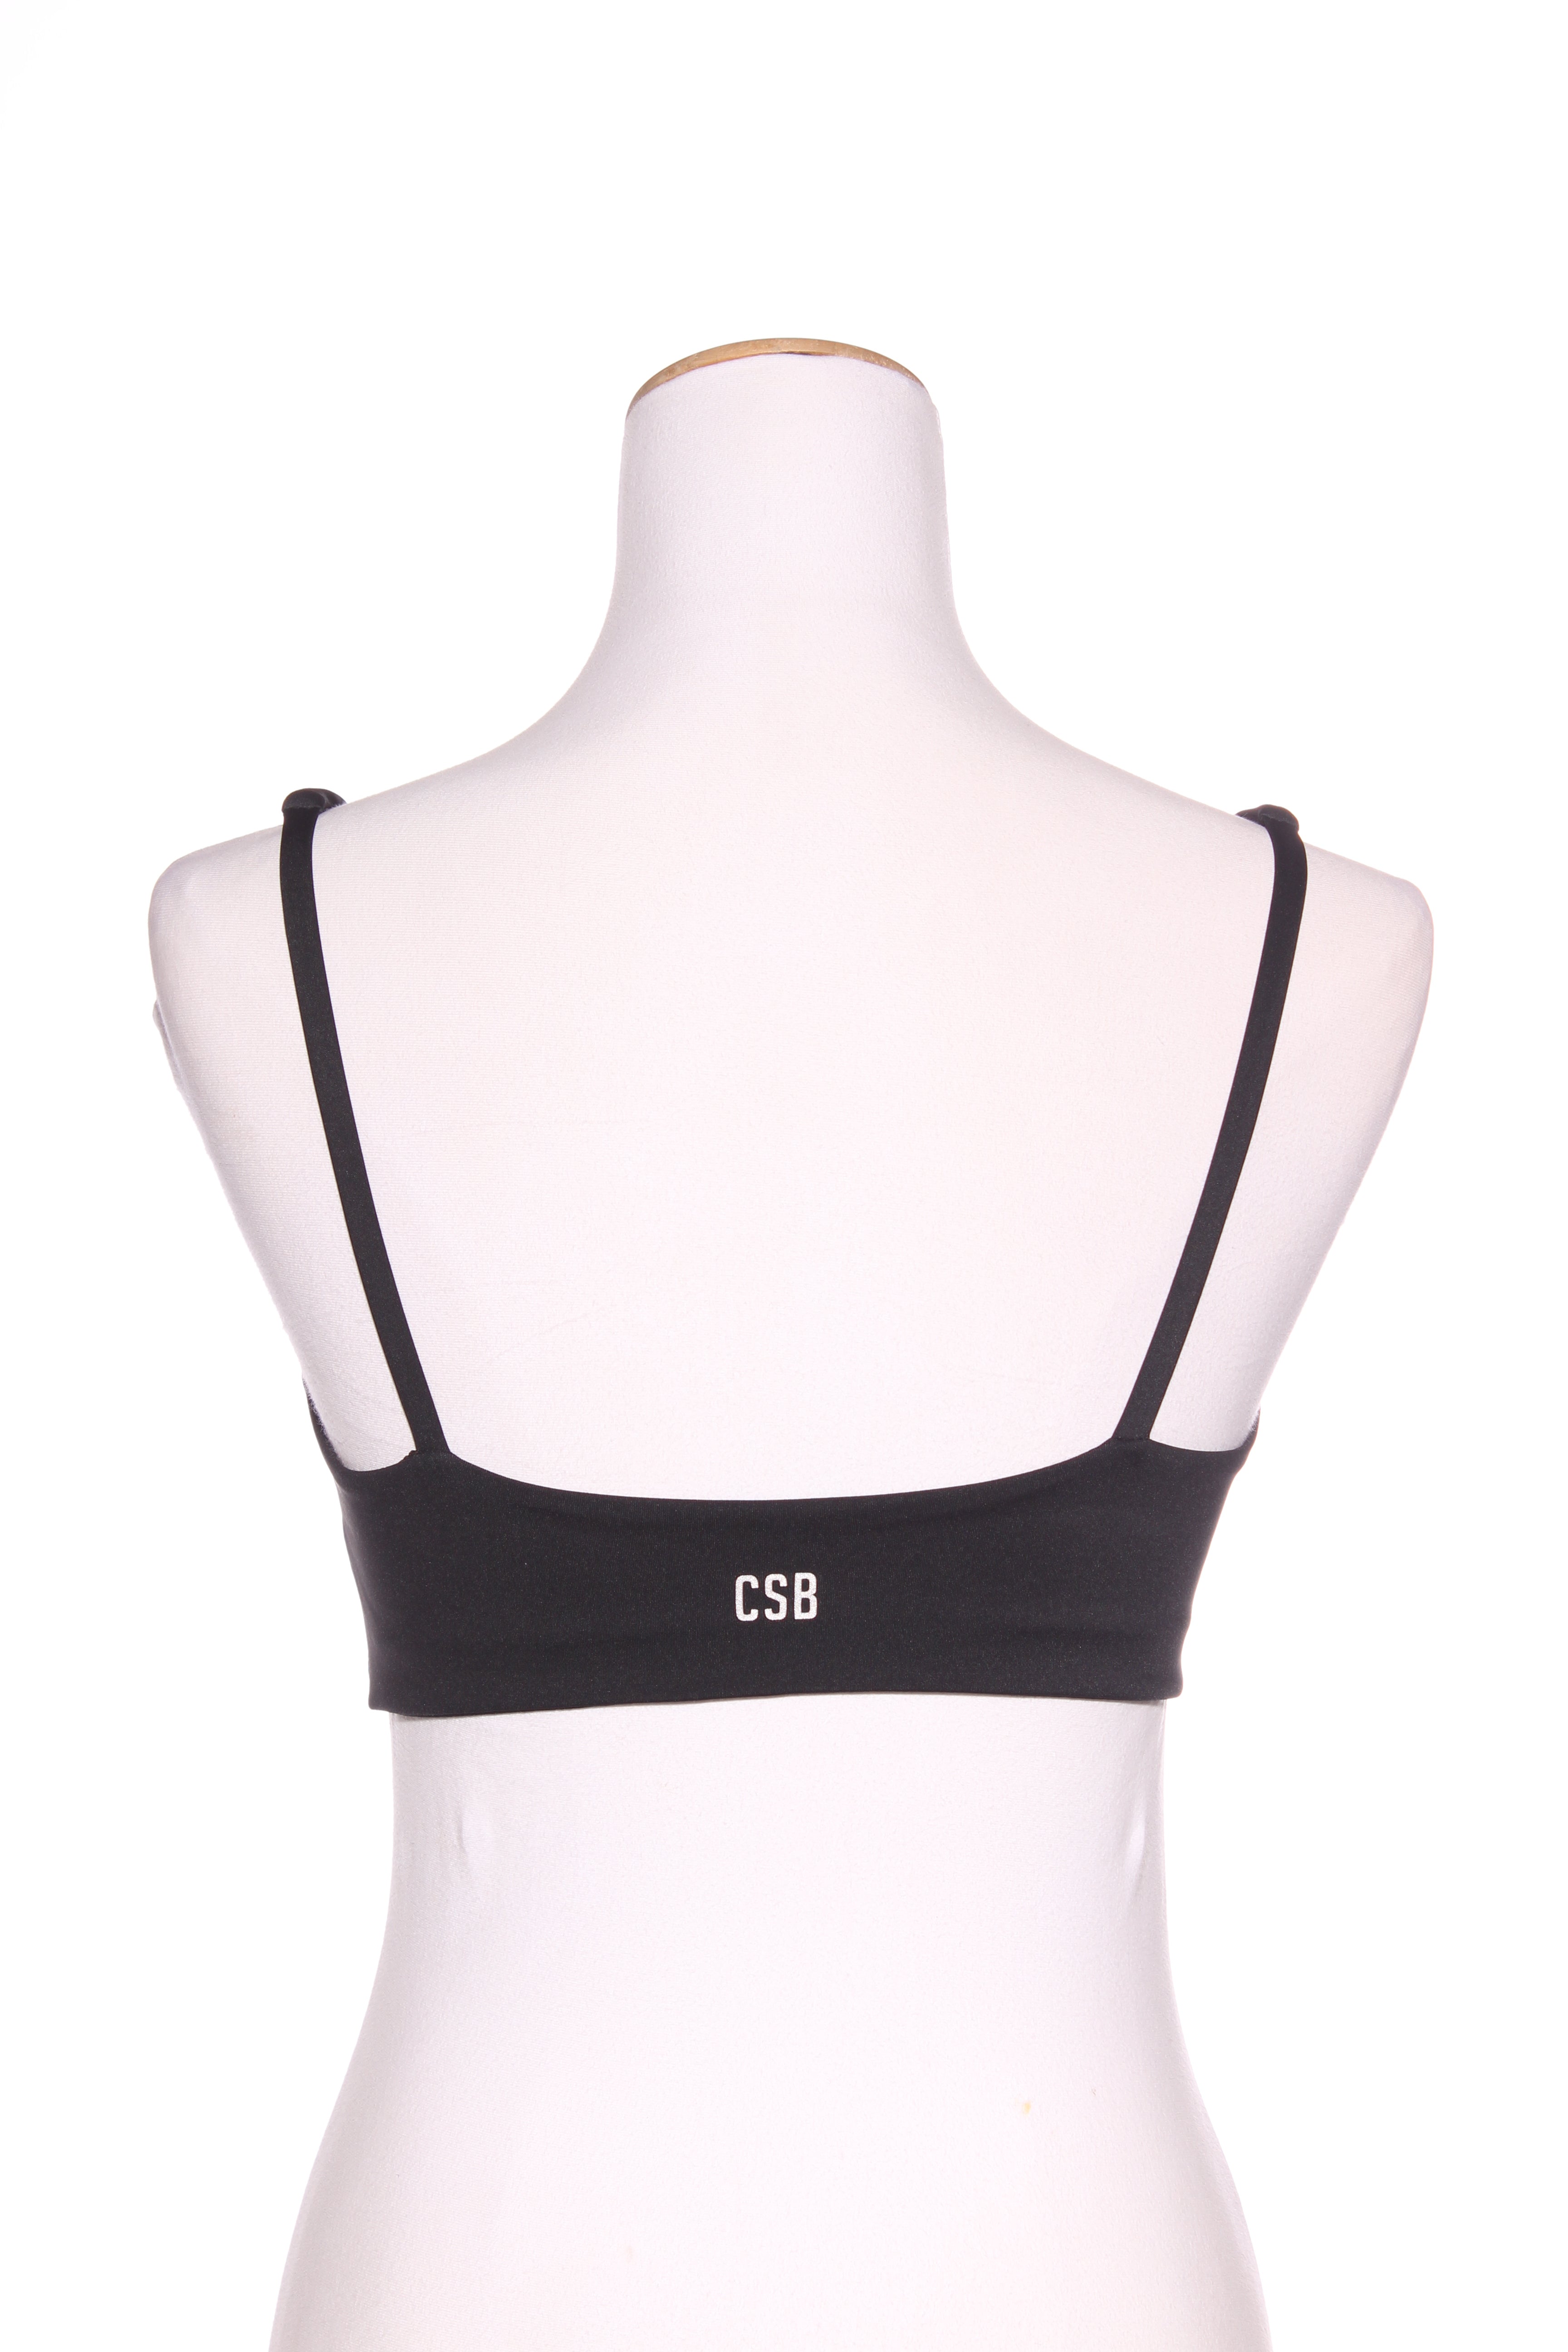 CSB - Serenity black sport bra/crop! 10, Recycle Style